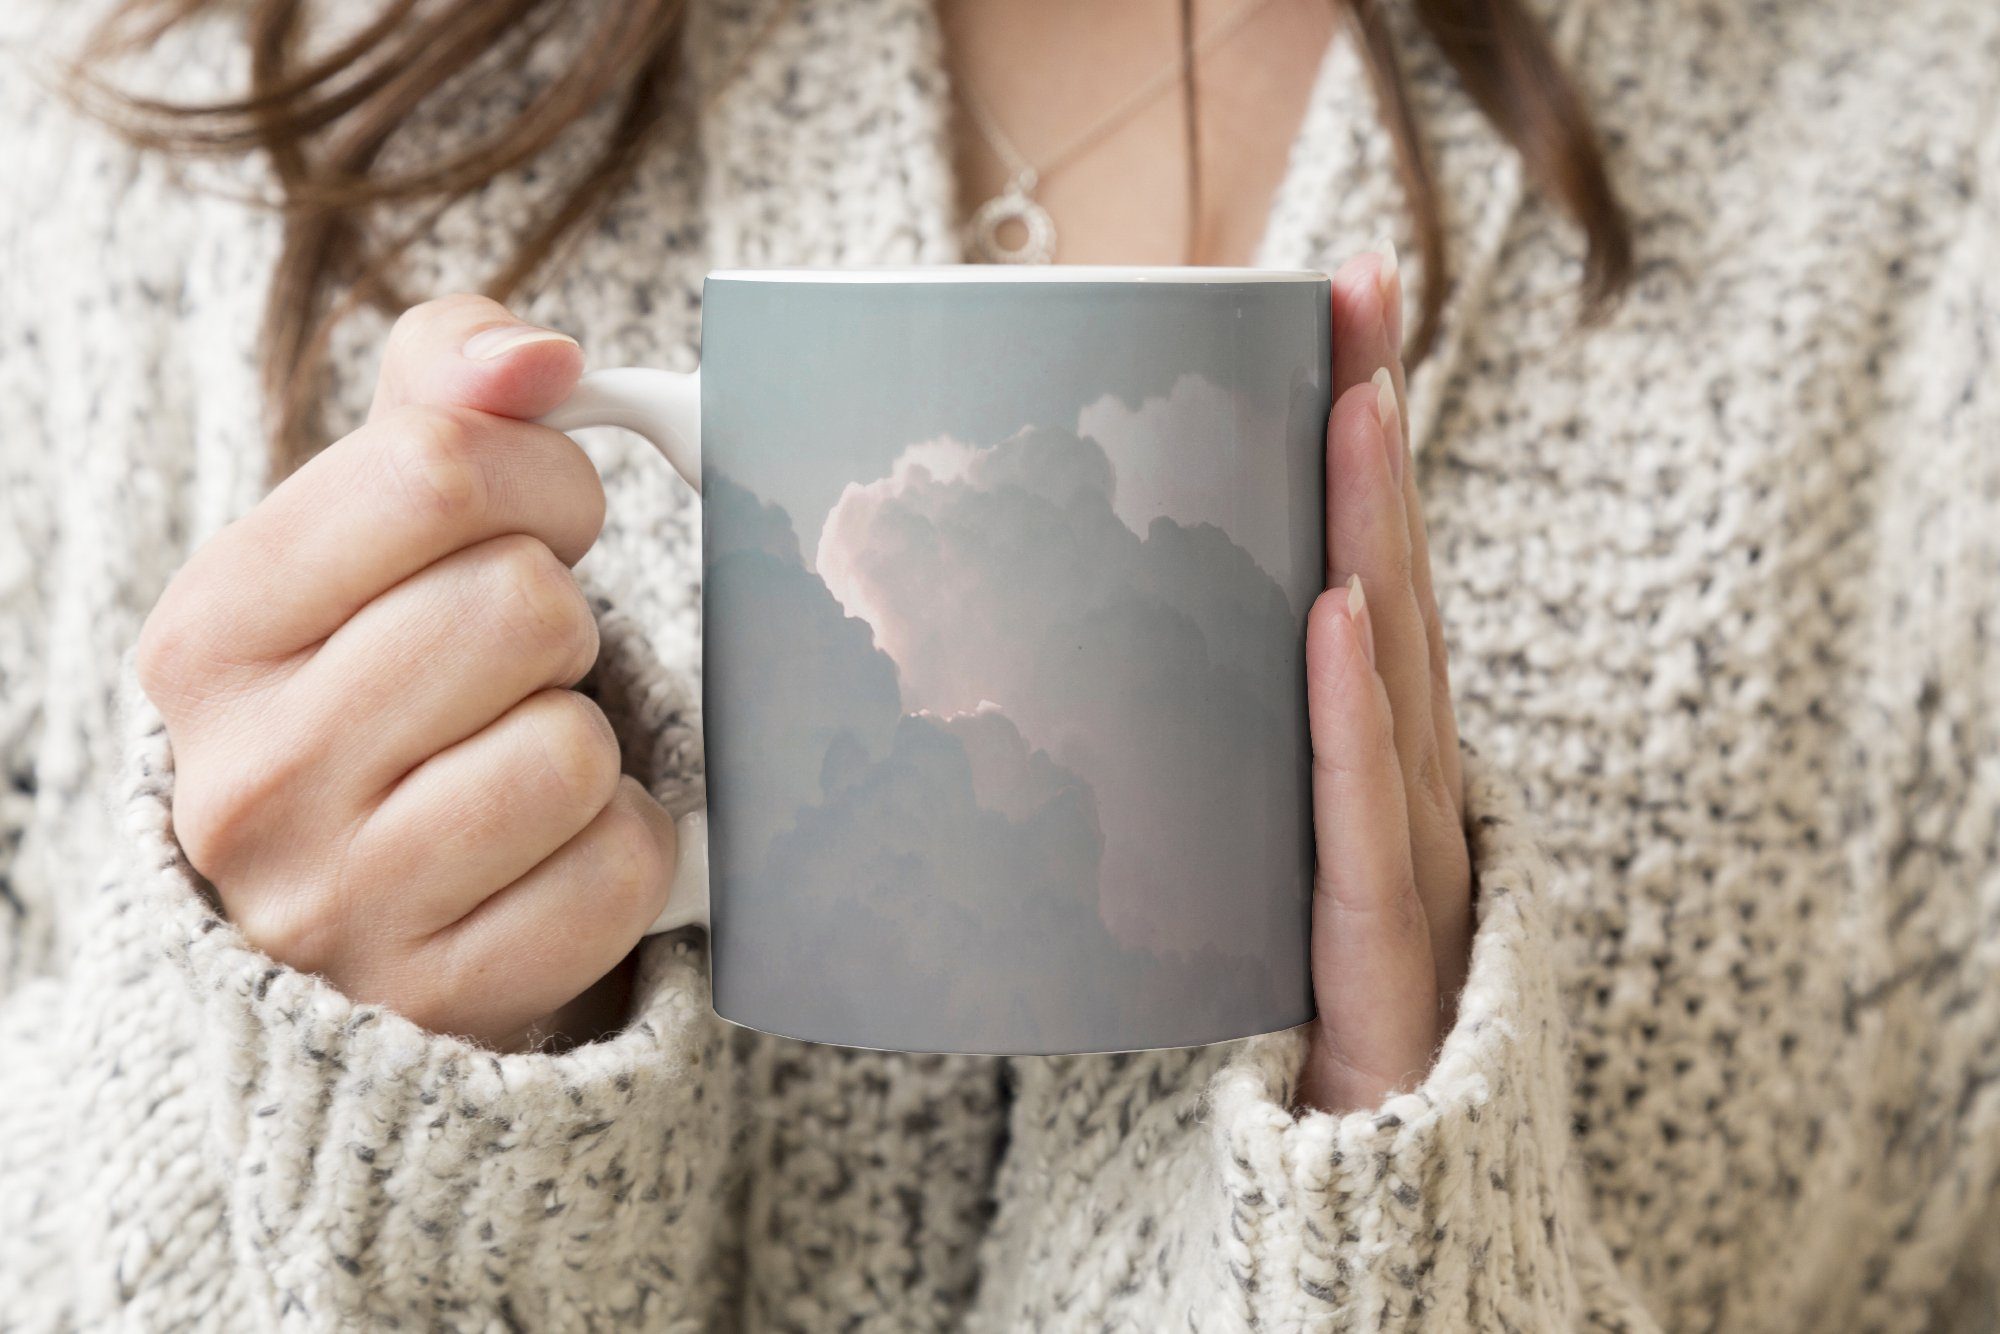 Becher, Geschenk - Tasse Teetasse, Natur, Wolken Himmel - Keramik, - Teetasse, MuchoWow Sonne Kaffeetassen,